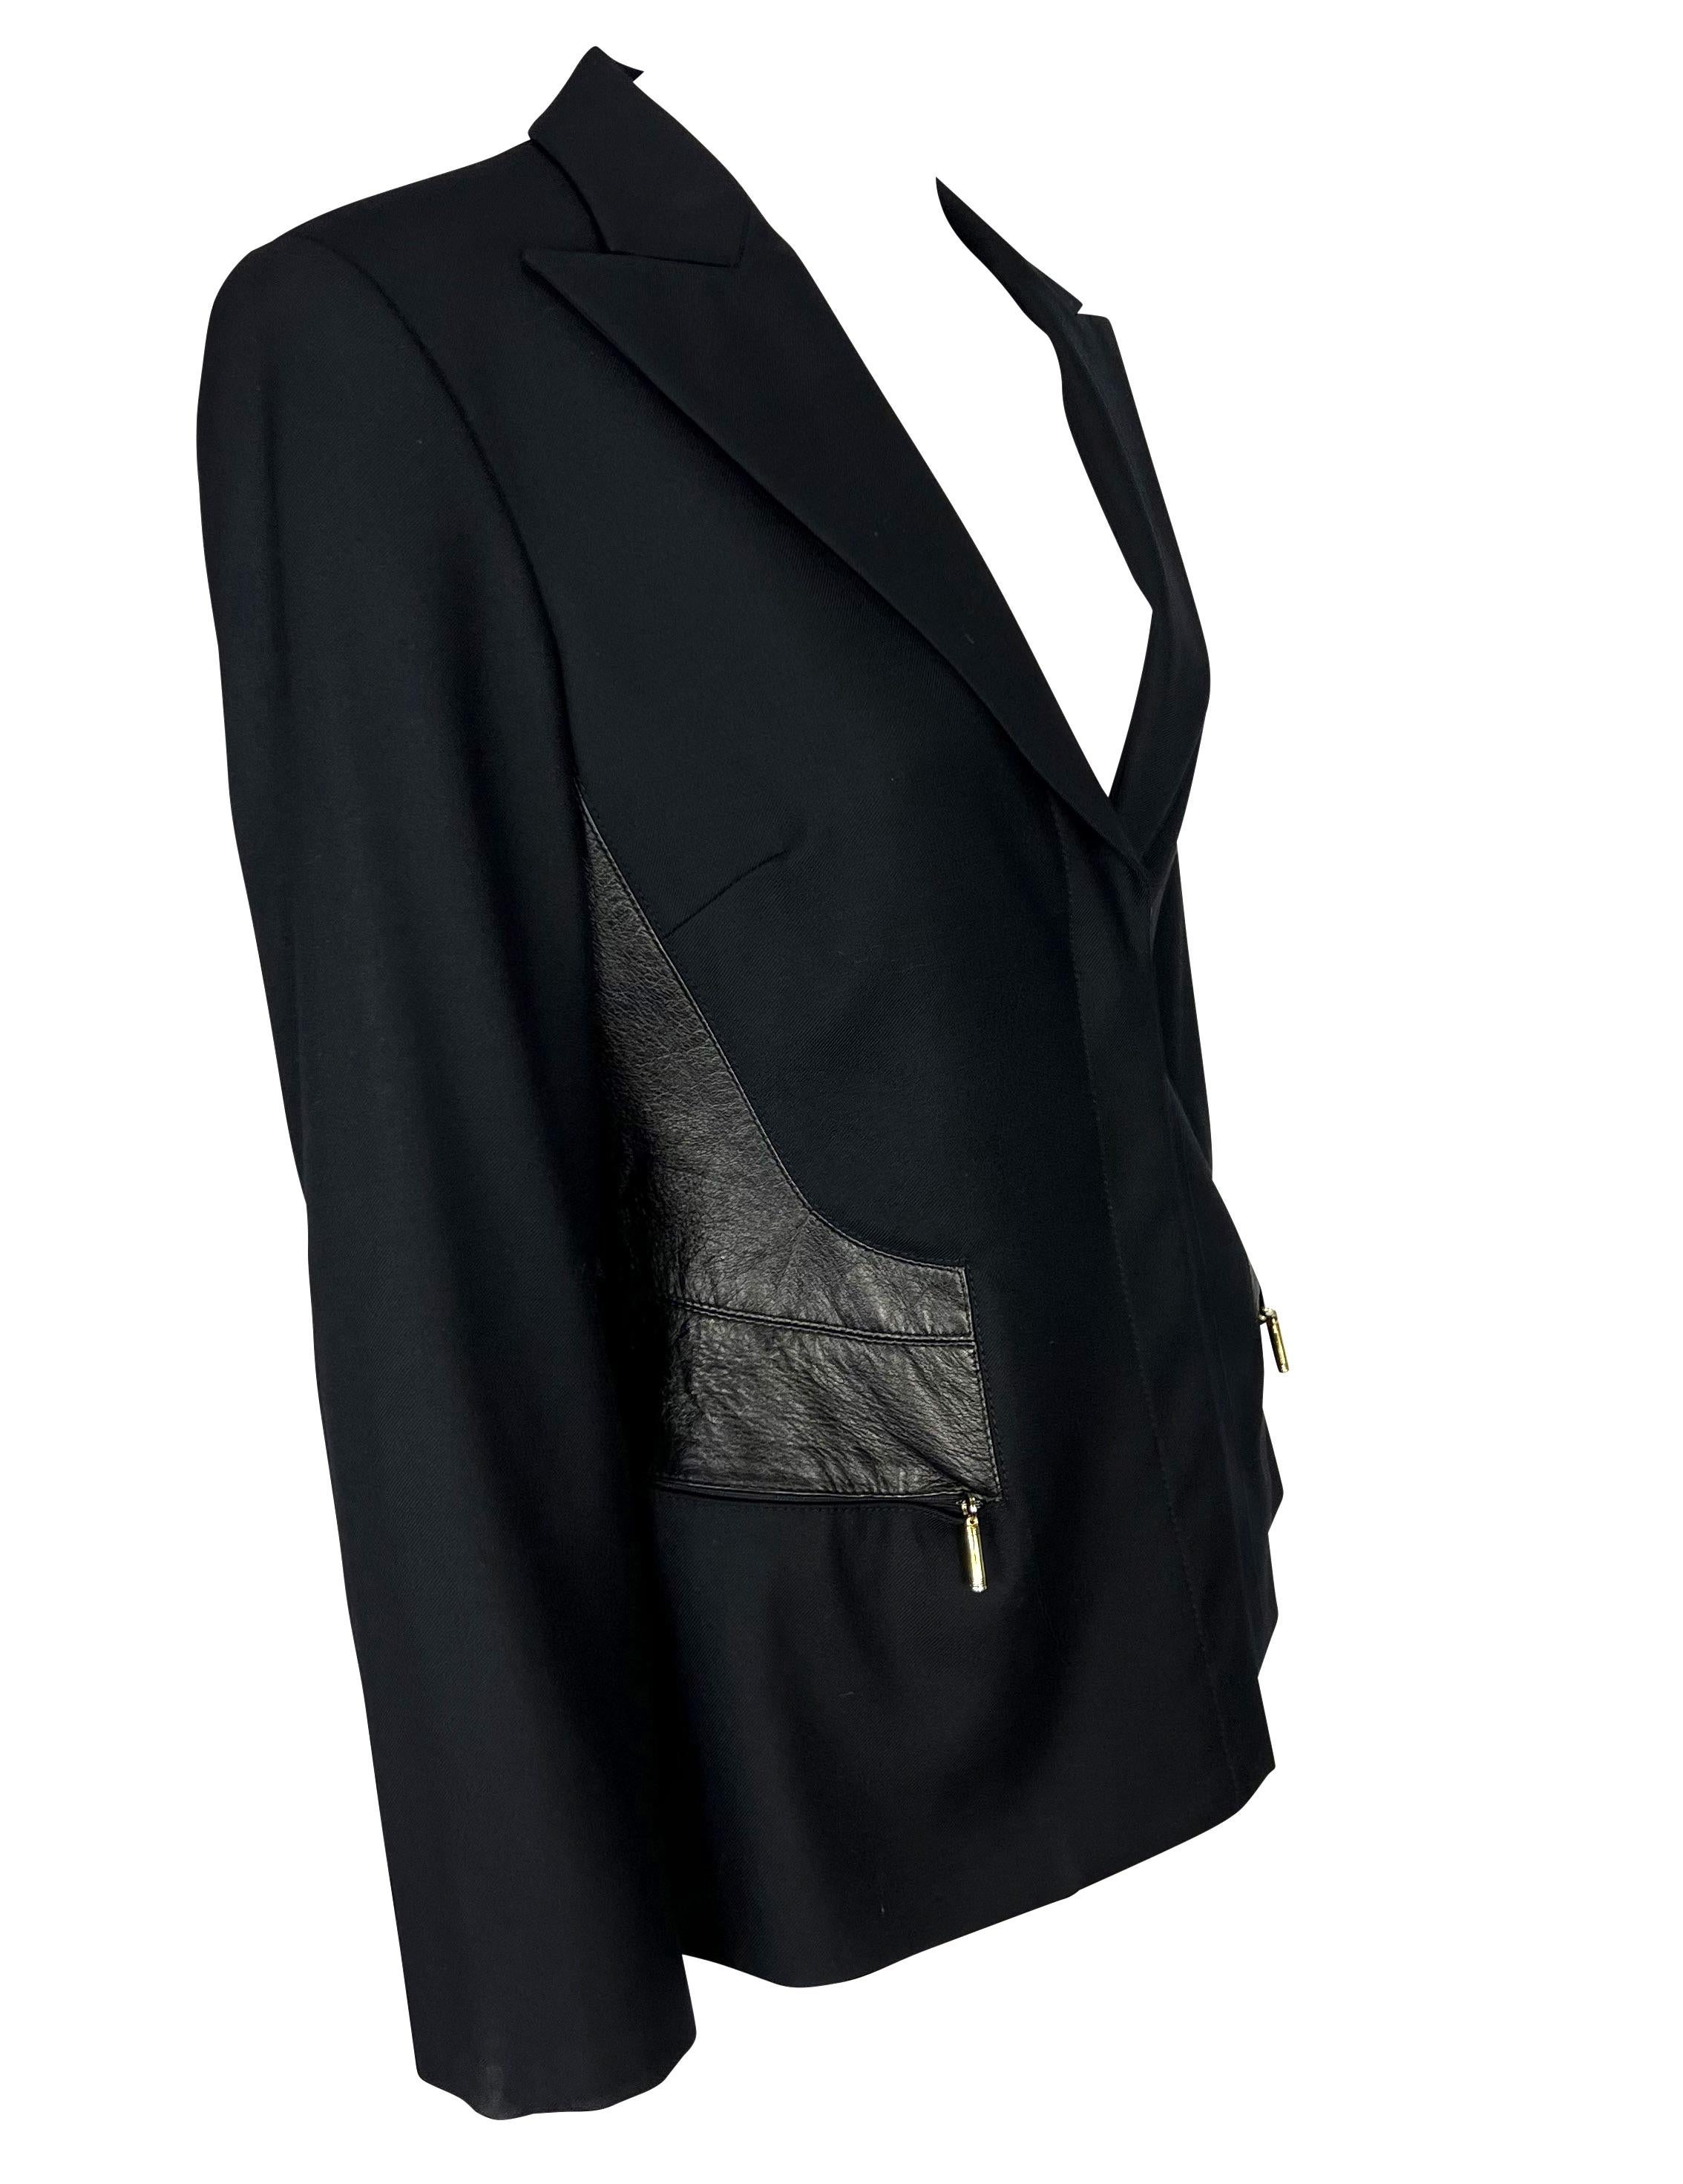 Women's or Men's F/W 2001 Gianni Versace by Donatella Black Wool Leather Panel Blazer Jacket For Sale